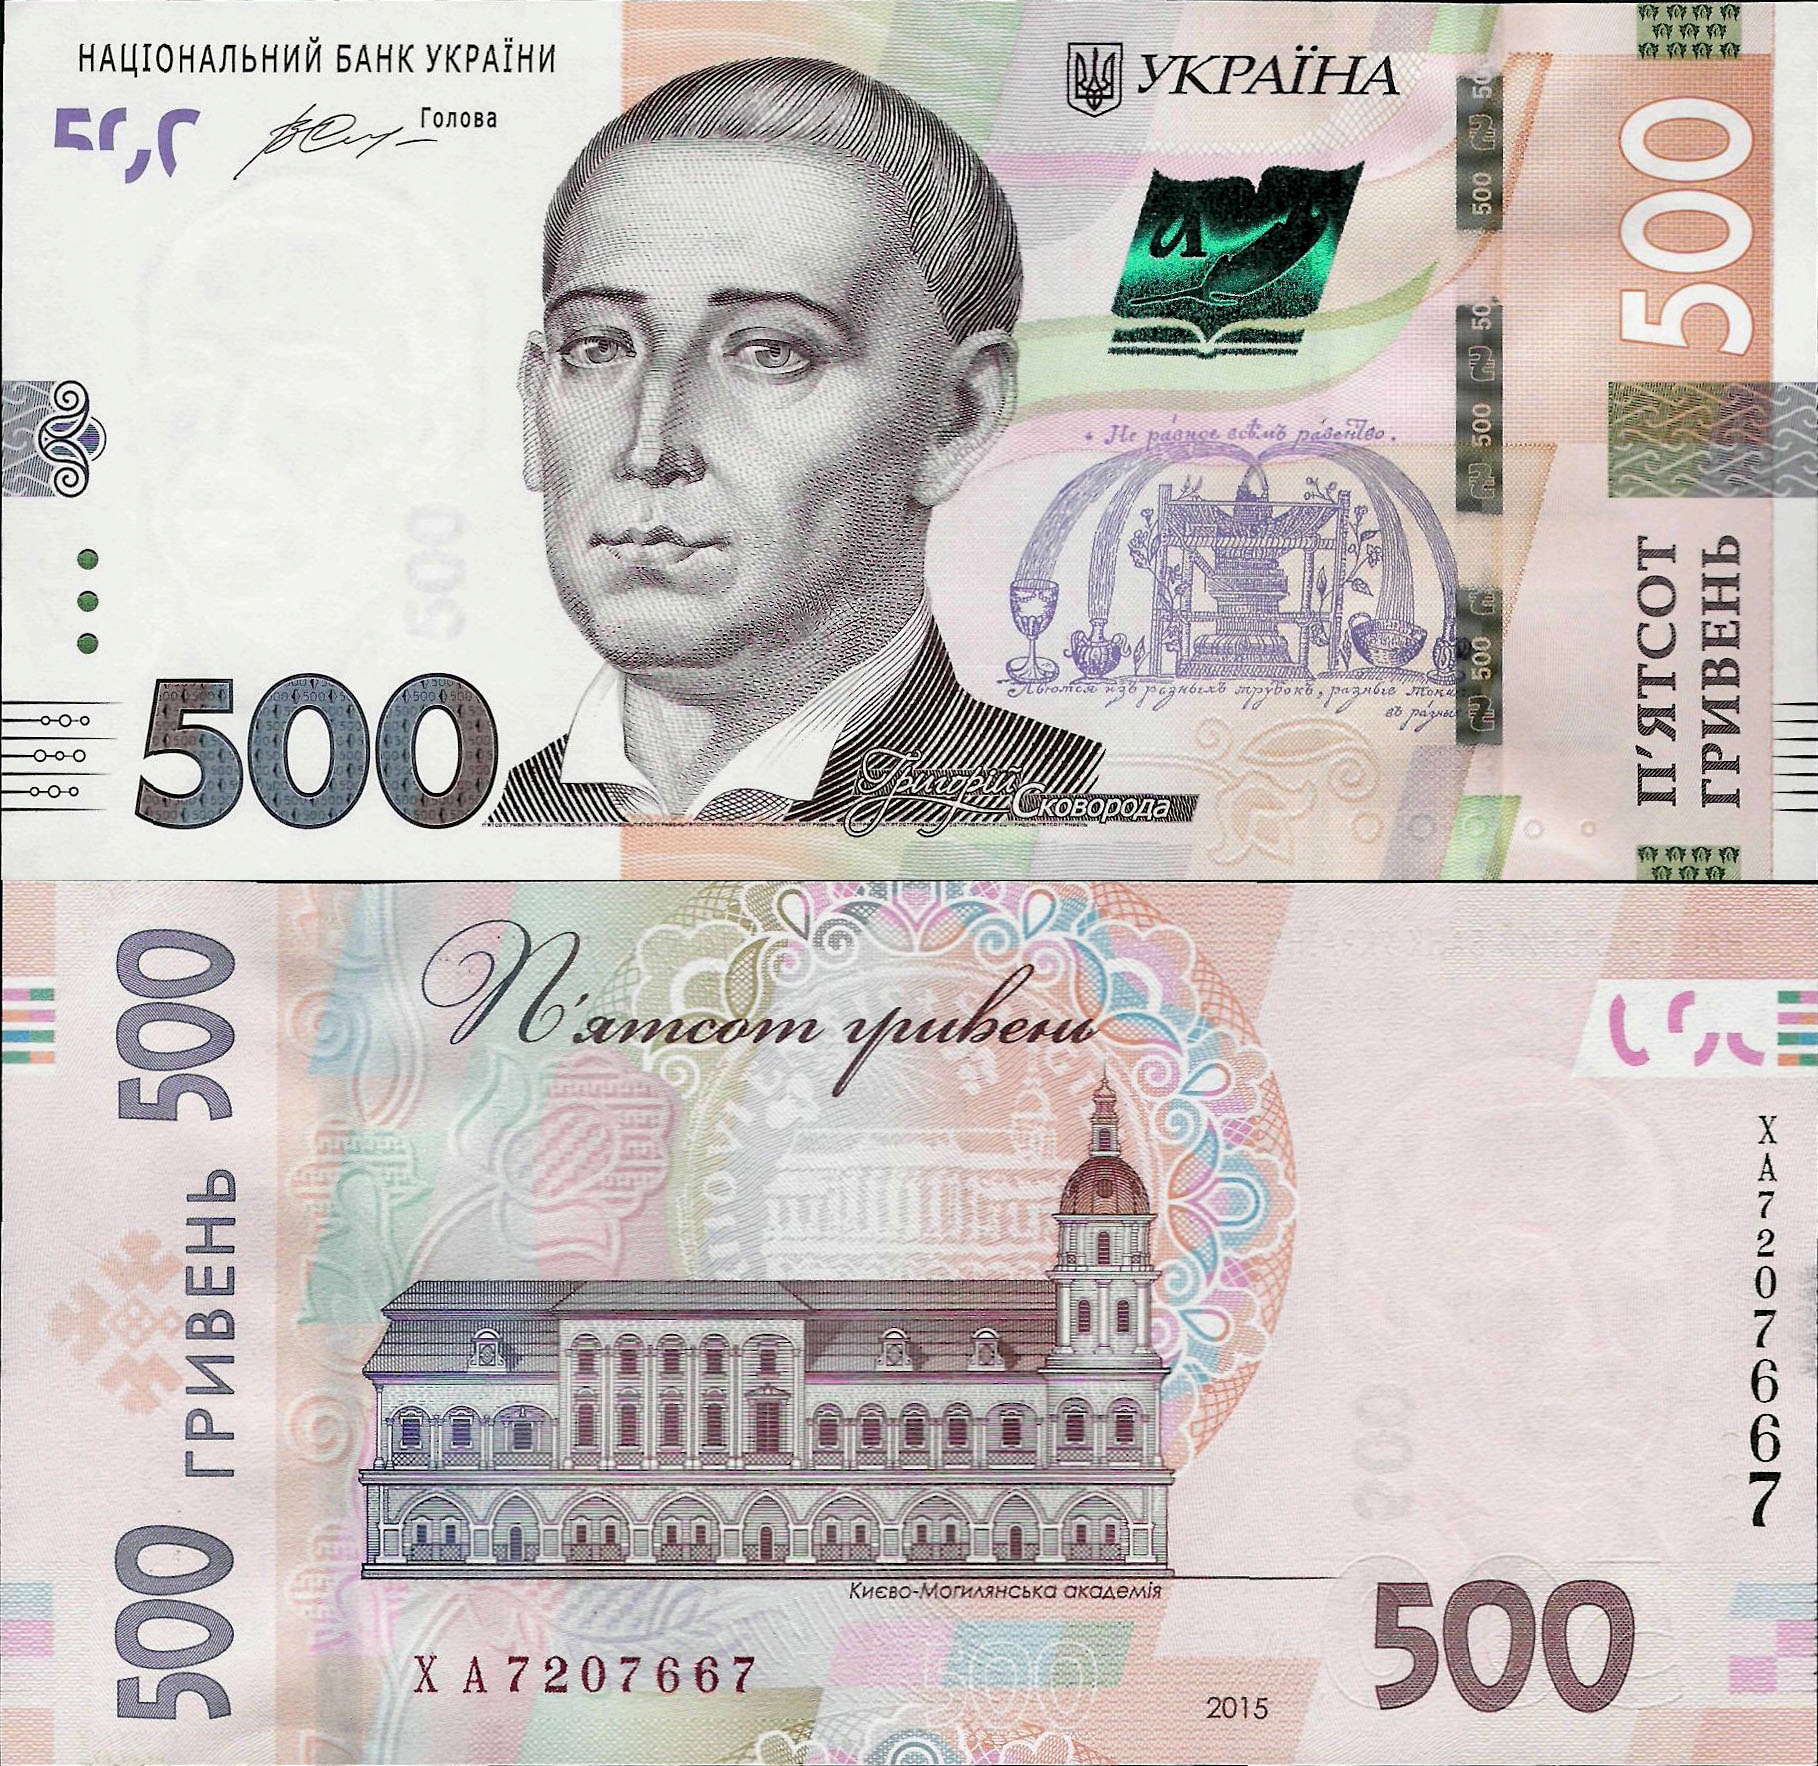 140 гривен в рублях. Банкнота Украины 500 гривен. 500 Гривен купюра.